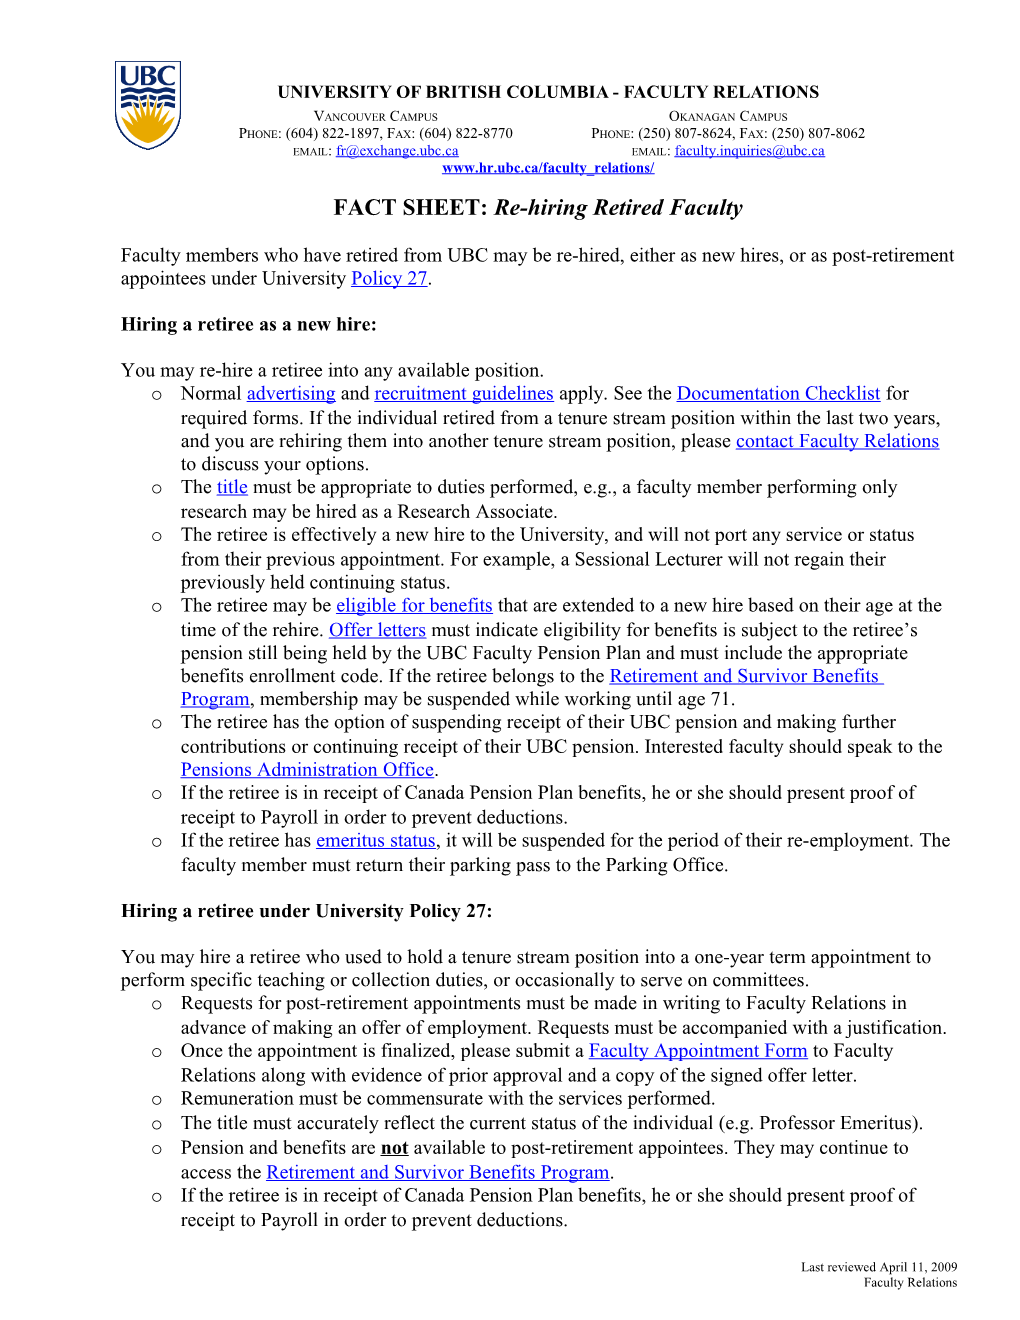 Fact Sheet: Rehiring Retired Faculty